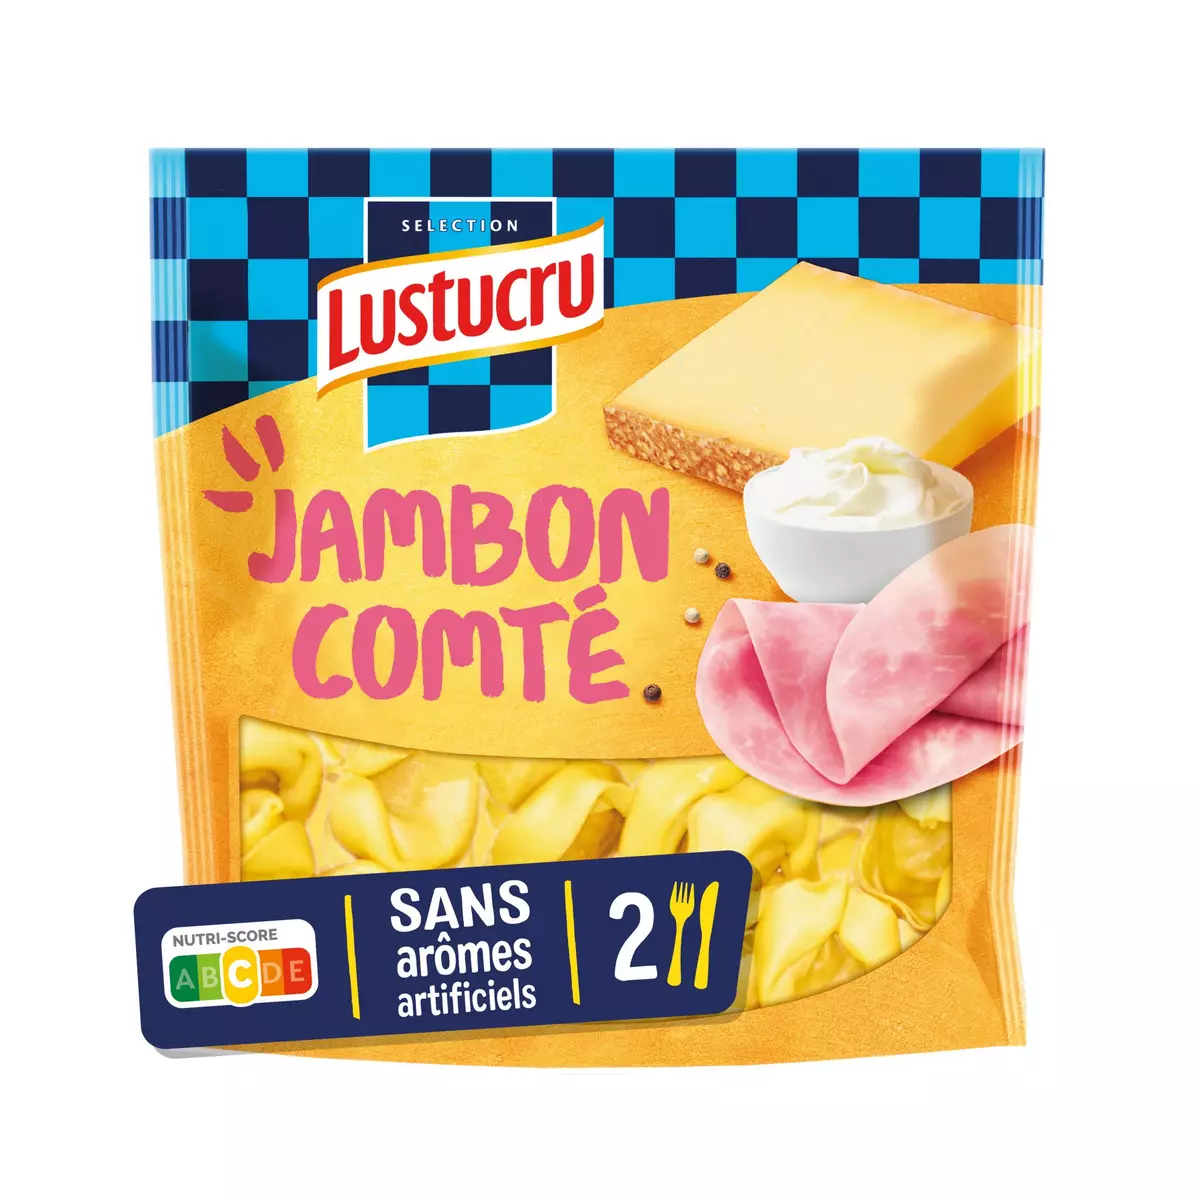 LUSTUCRU Tortellini jambon de Paris comté 2 portions 250g